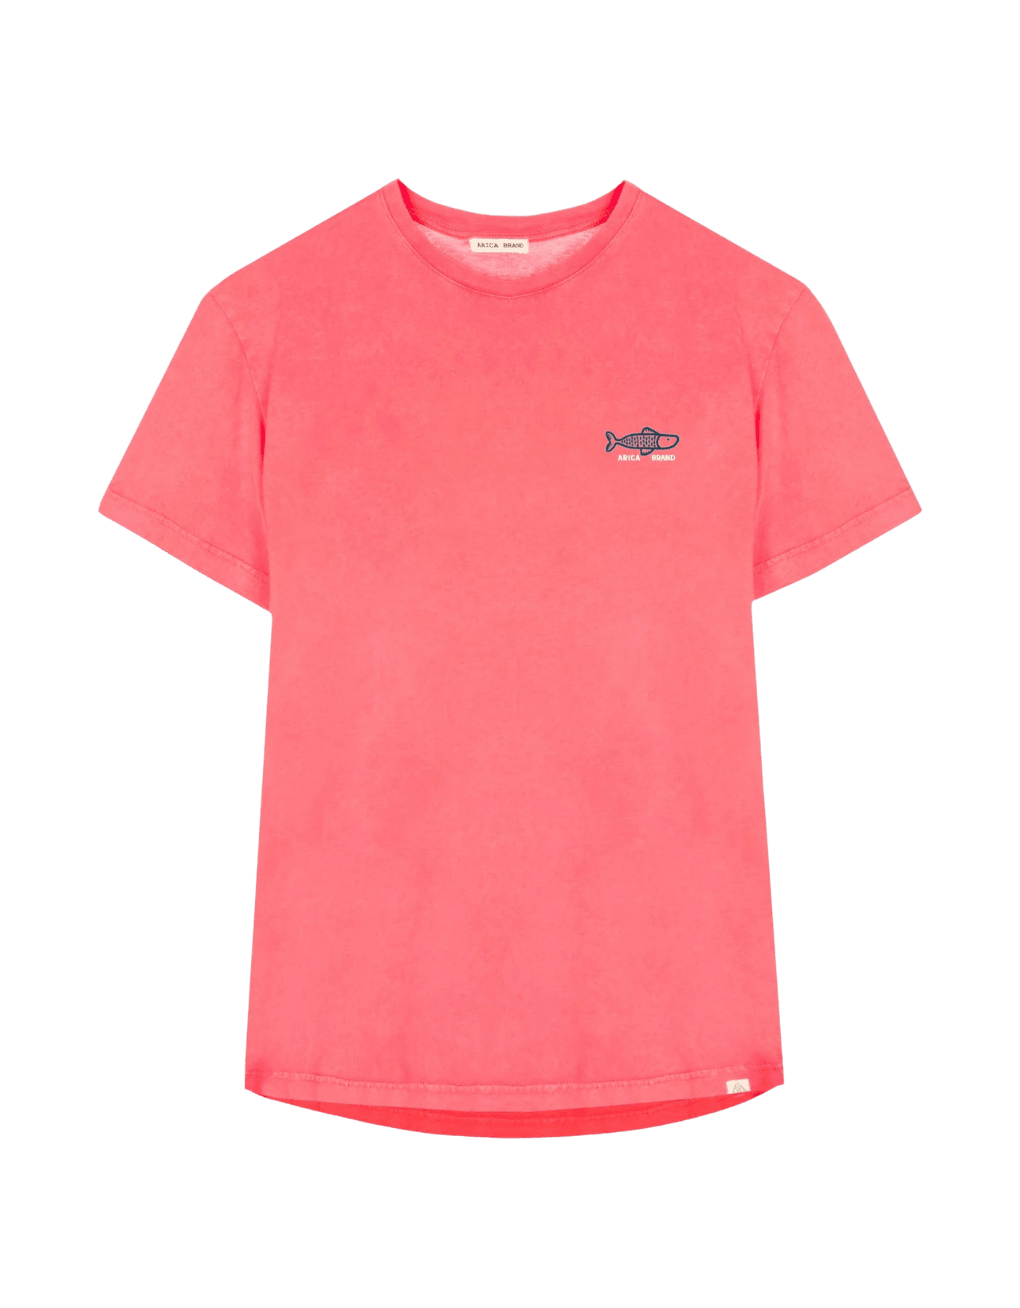 Camiseta Arica Poke House Coral Premium - ECRU